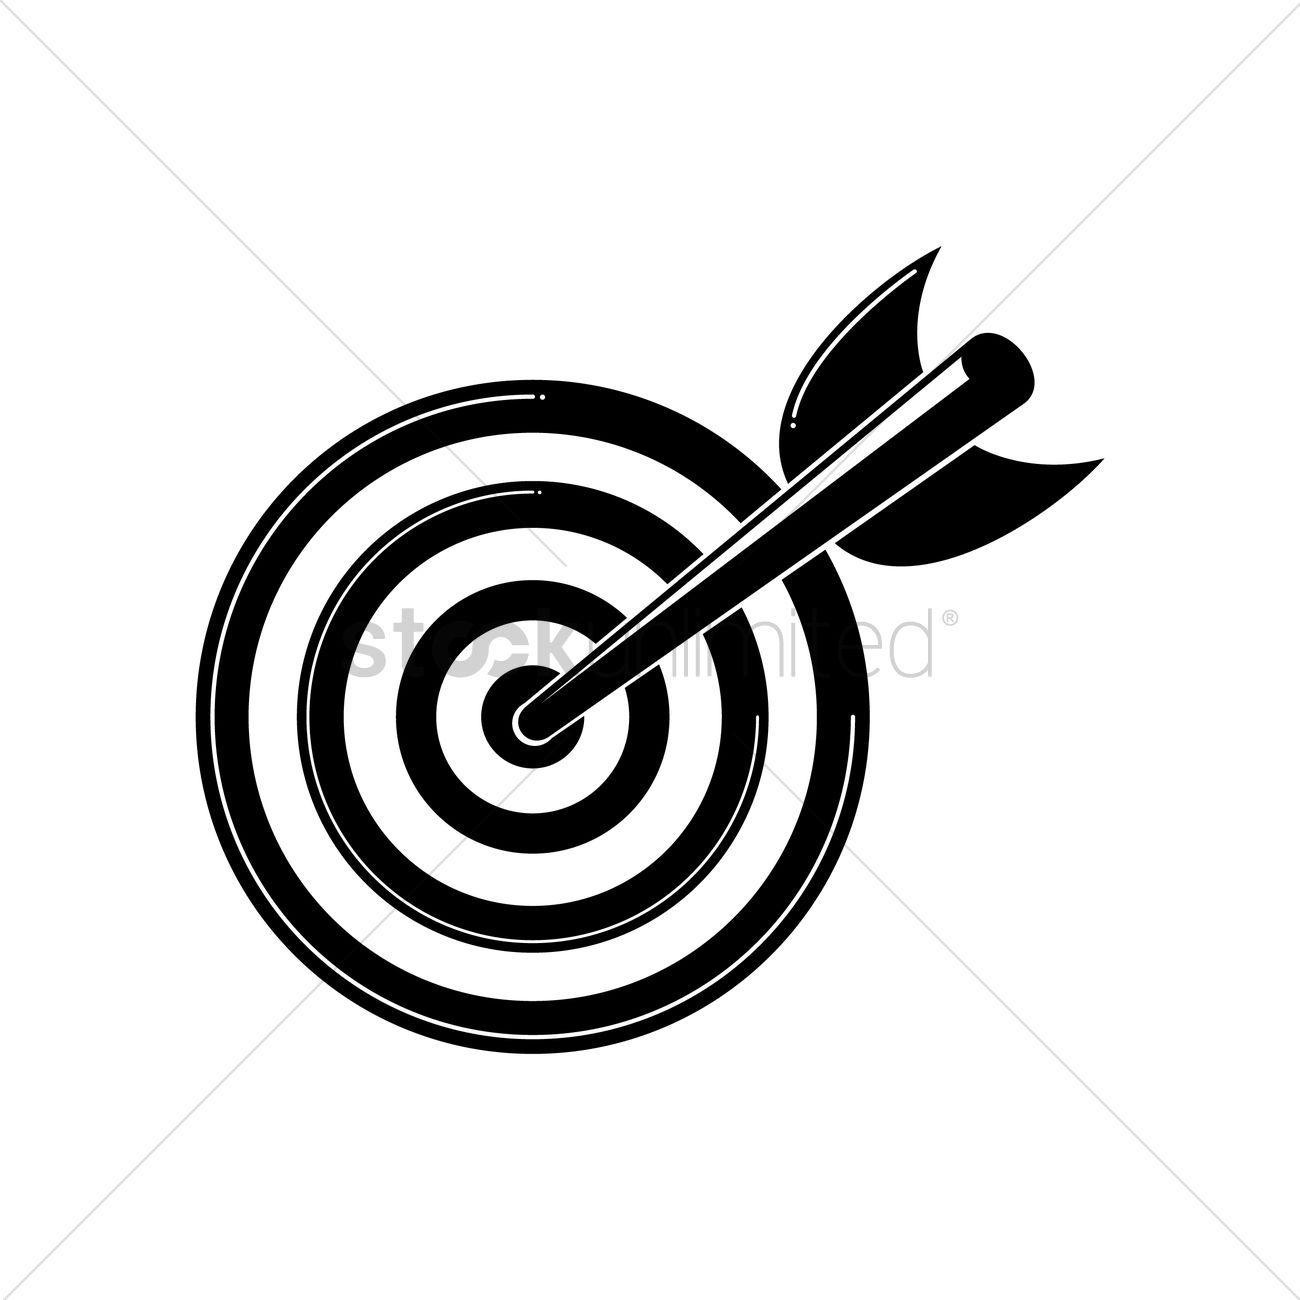 Black and White Bullseye Logo - Bullseye with arrow icon Vector Image